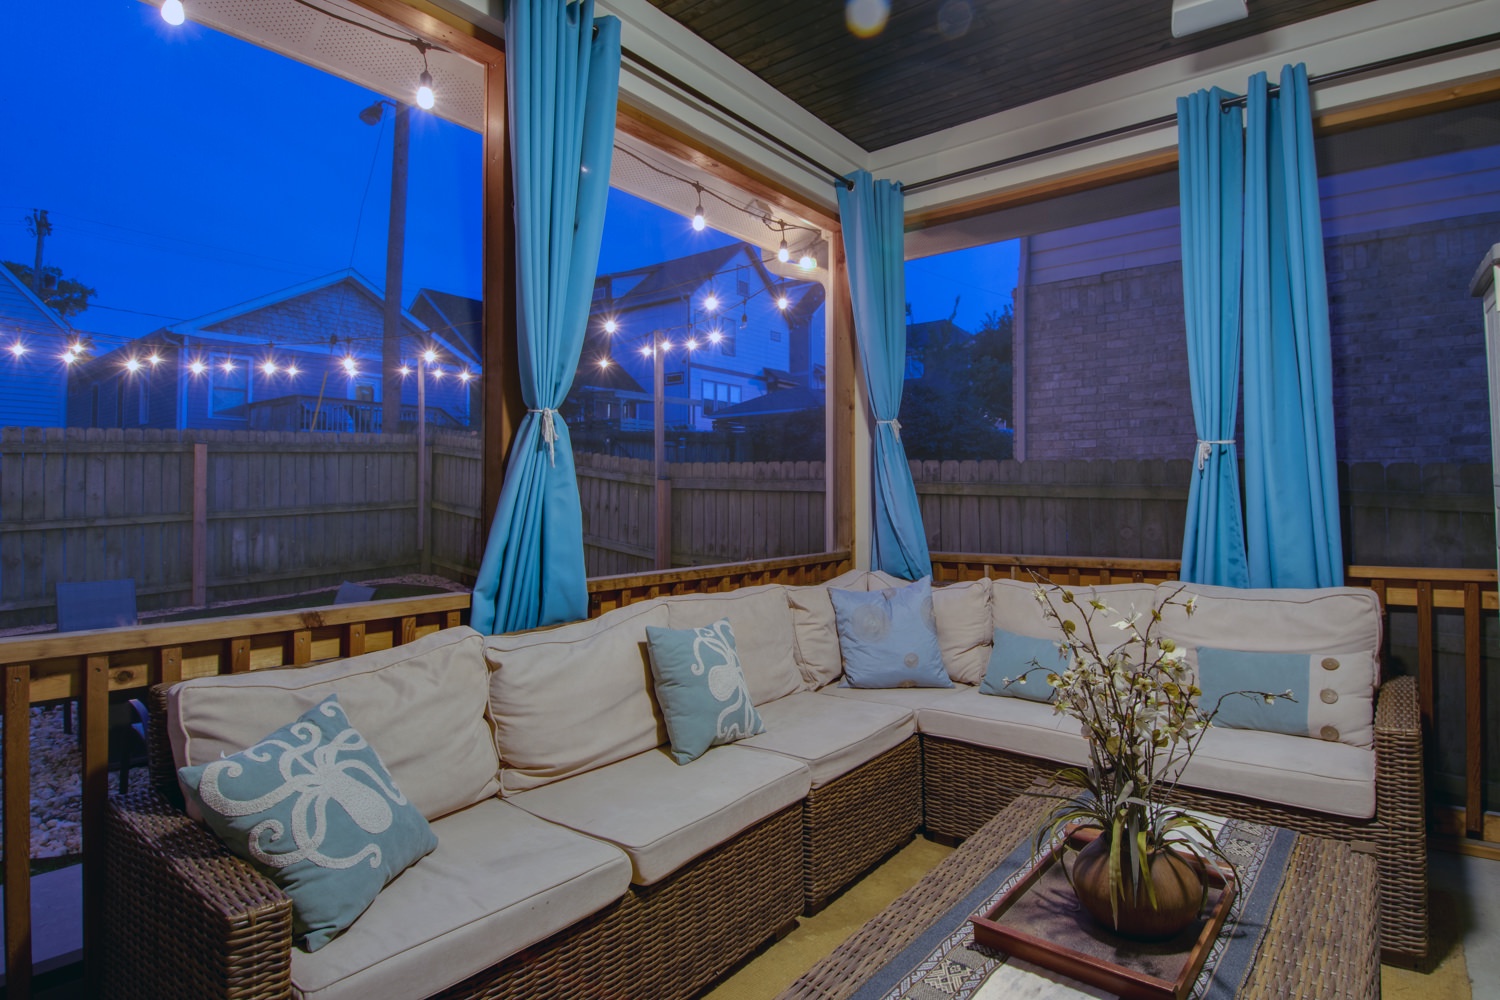 Backyard covered patio seating at night